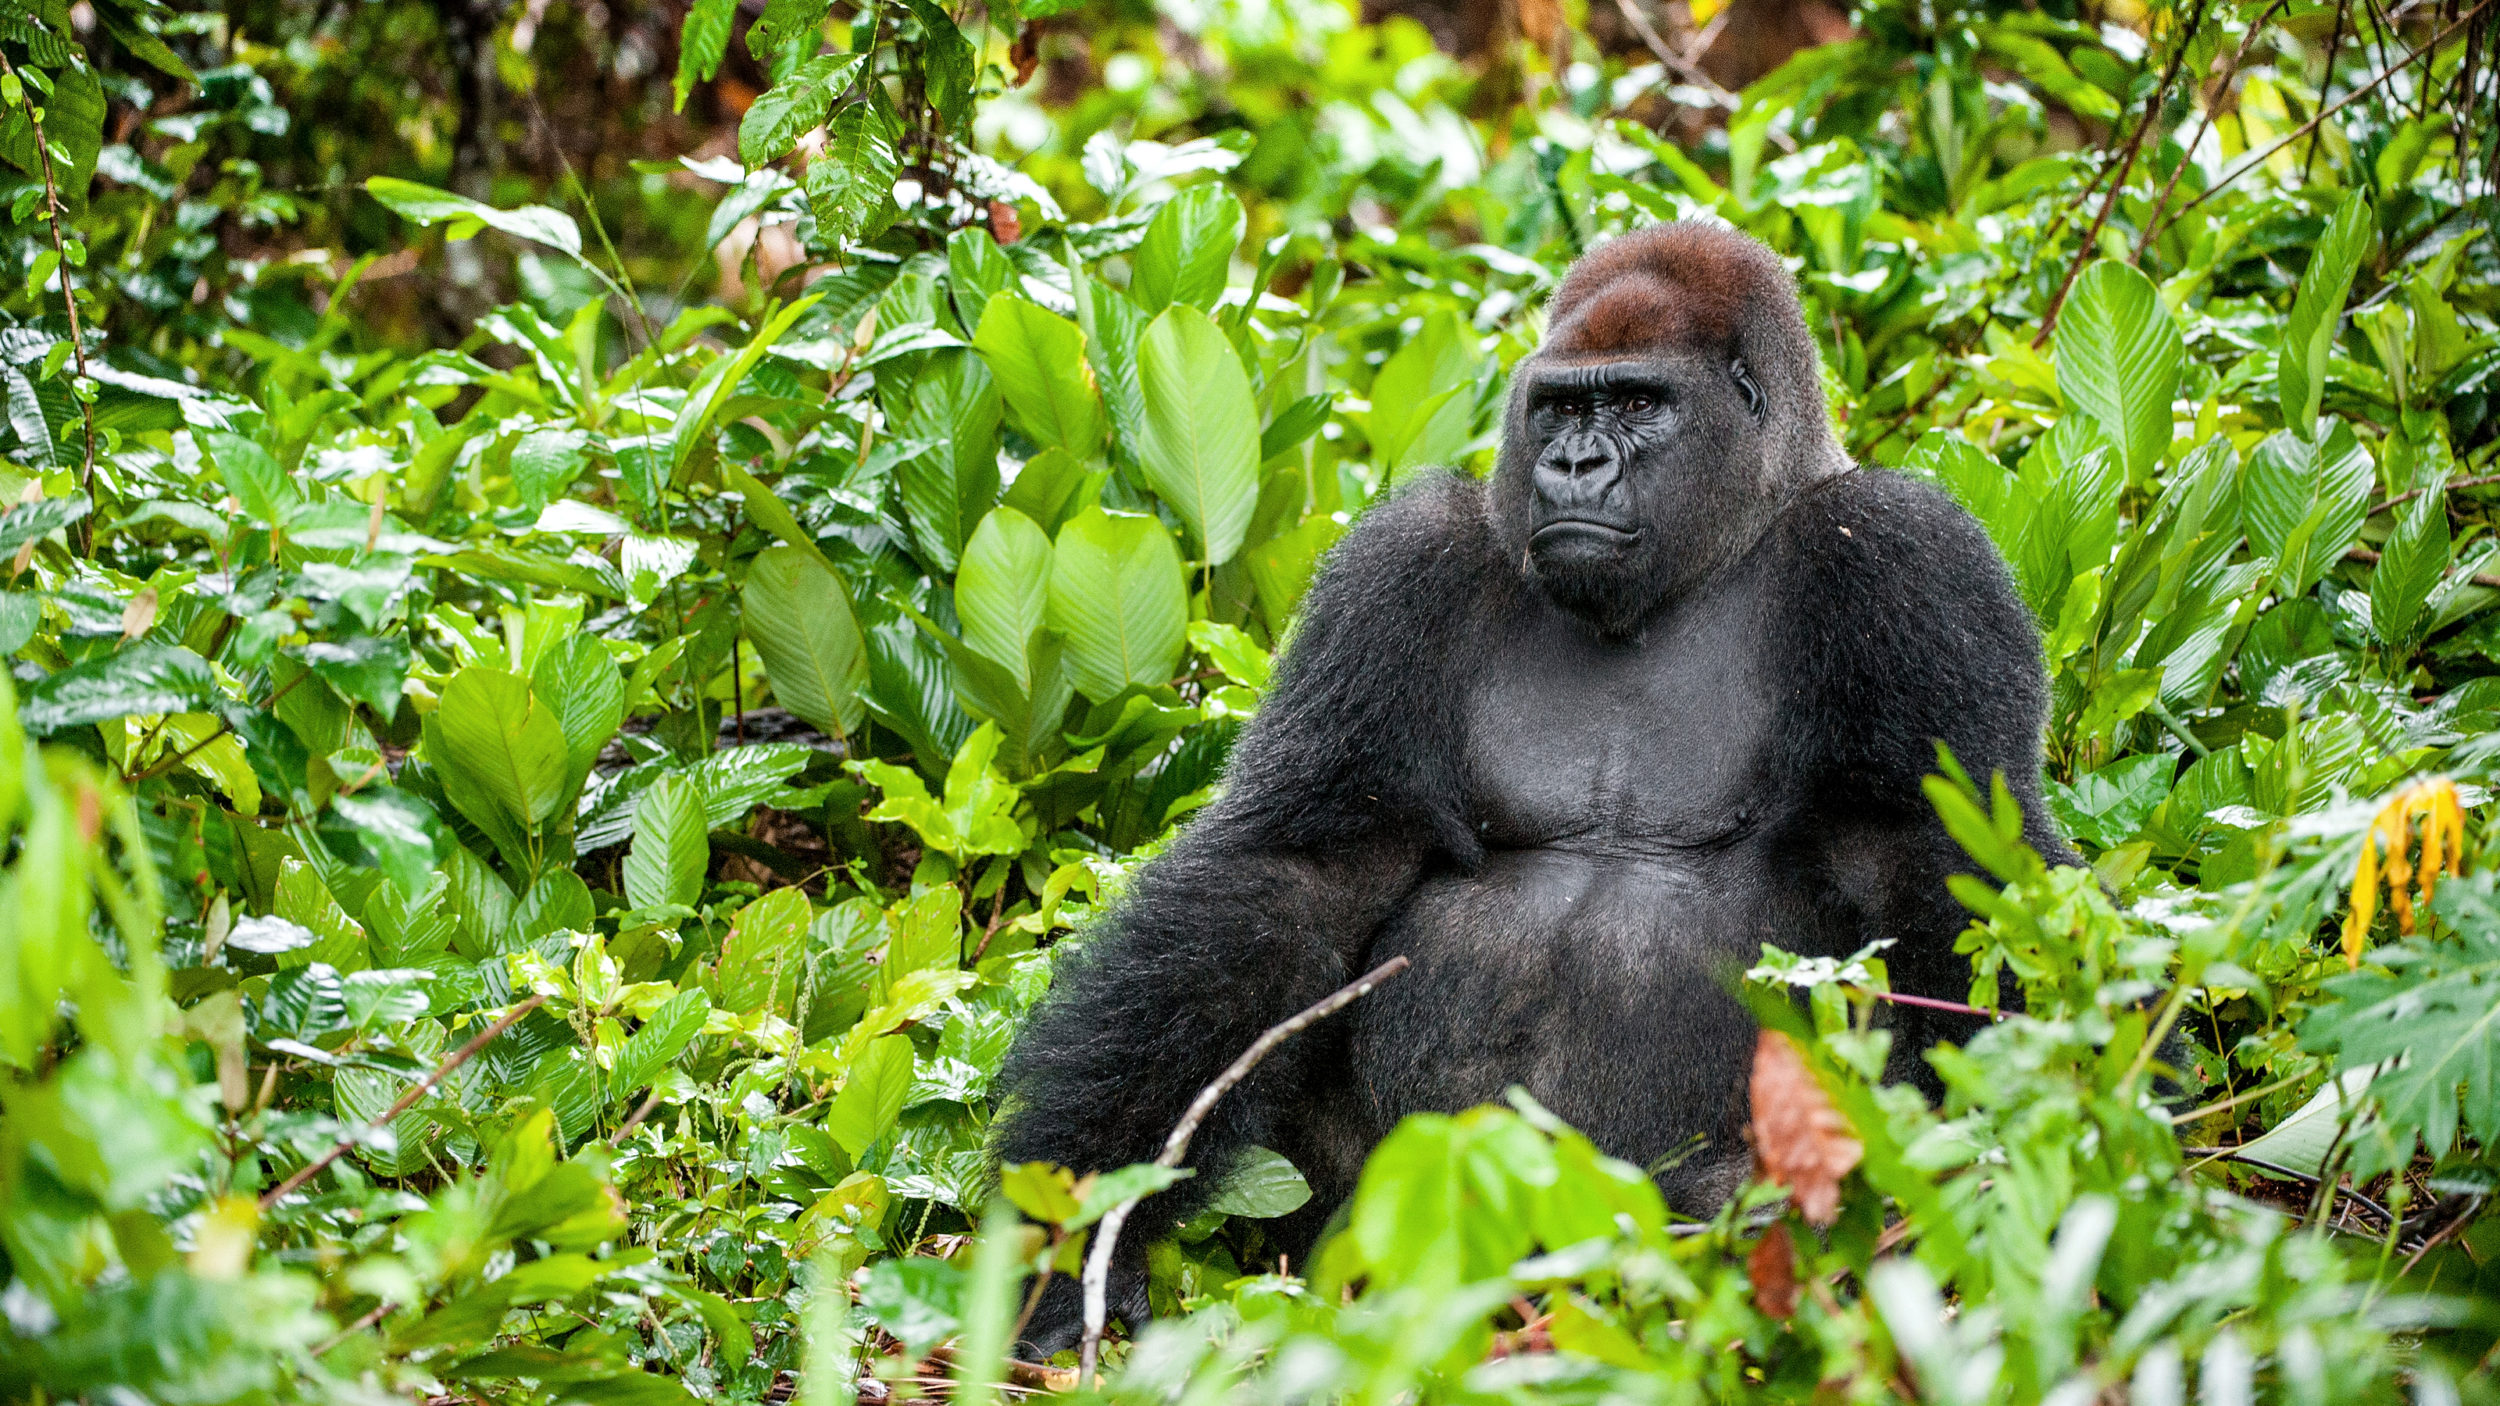 Gorilla in Central African Republic forest.